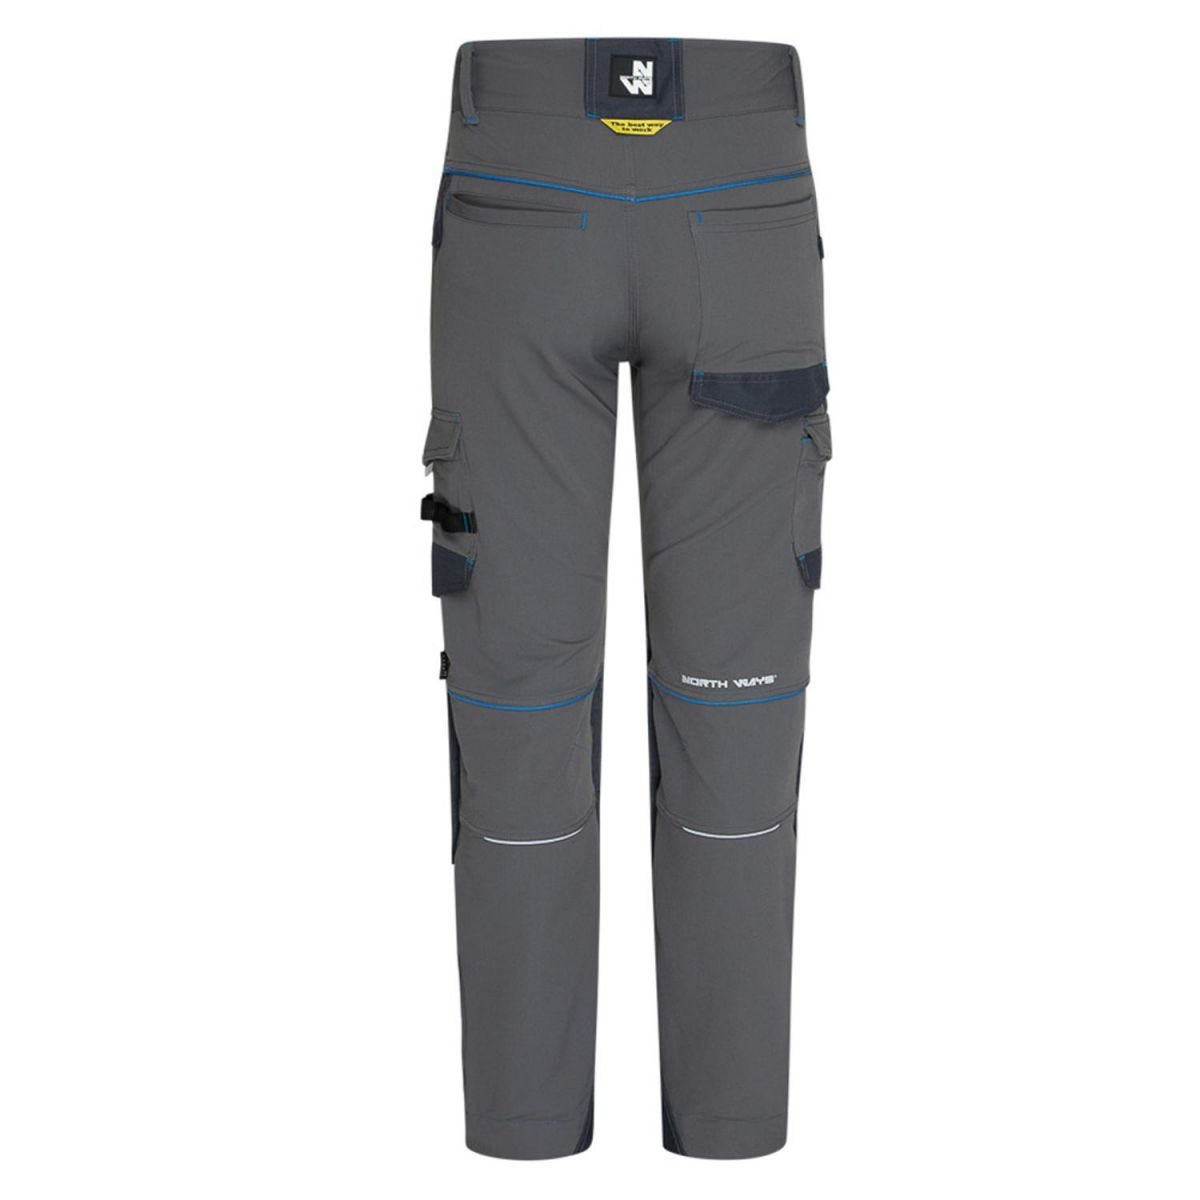 Pantalon de travail SACHA gris/bleu - North Ways - Taille 40 2